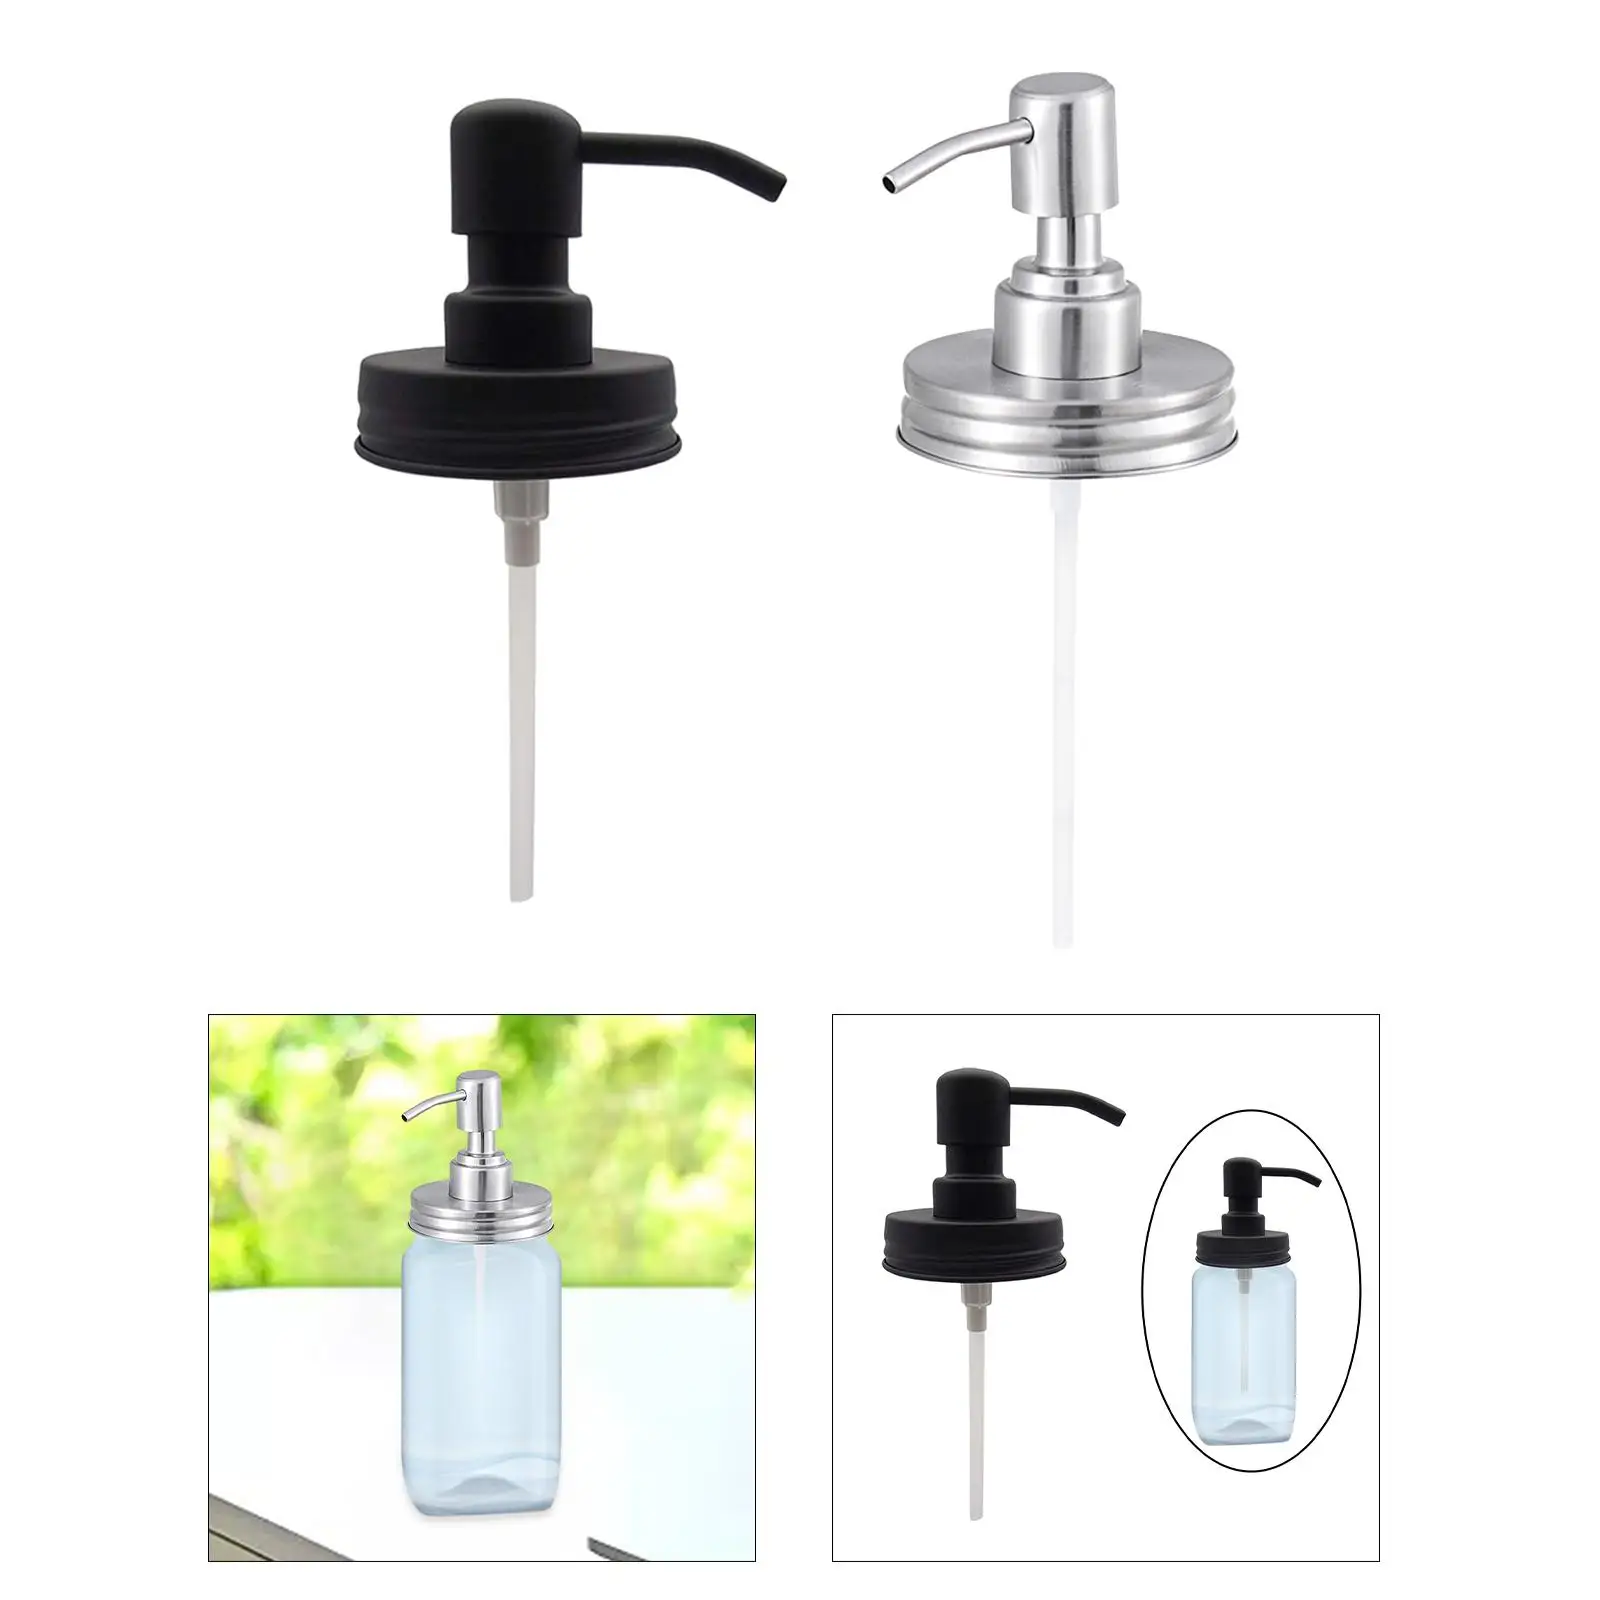 Stainless Steel, Soap Pump Nozzle Head, Soap Dispenser Pump ,Replacement, Metal Pump Head, for Bathroom Countertop Accessories